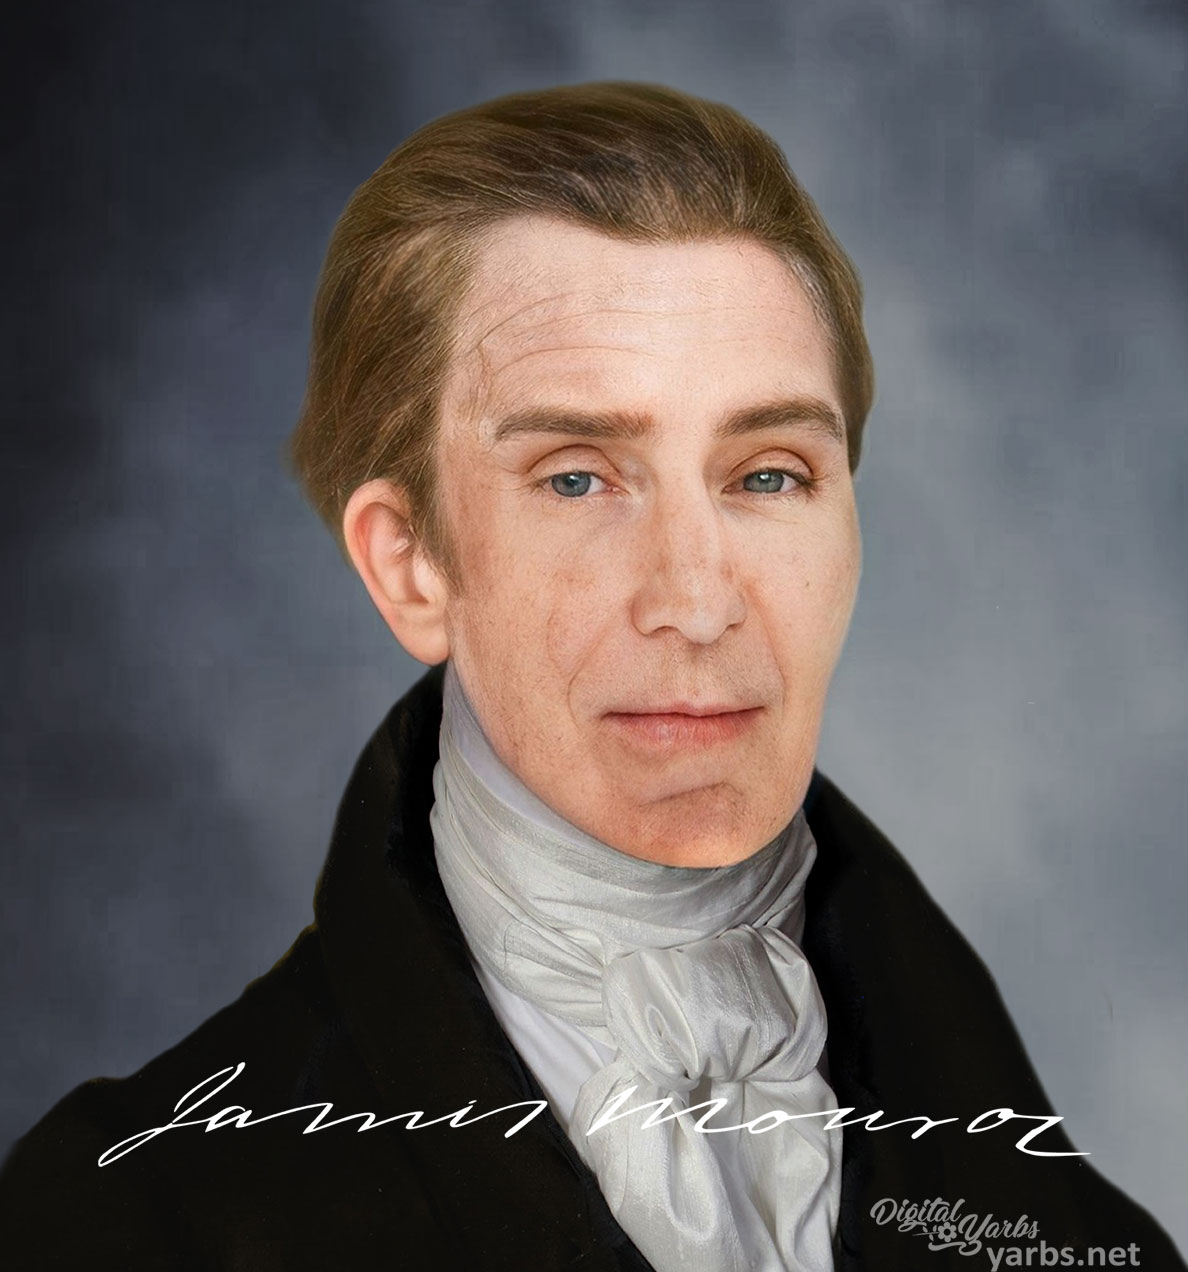 James Monroe's de-aged death reconstructed using Photoshop